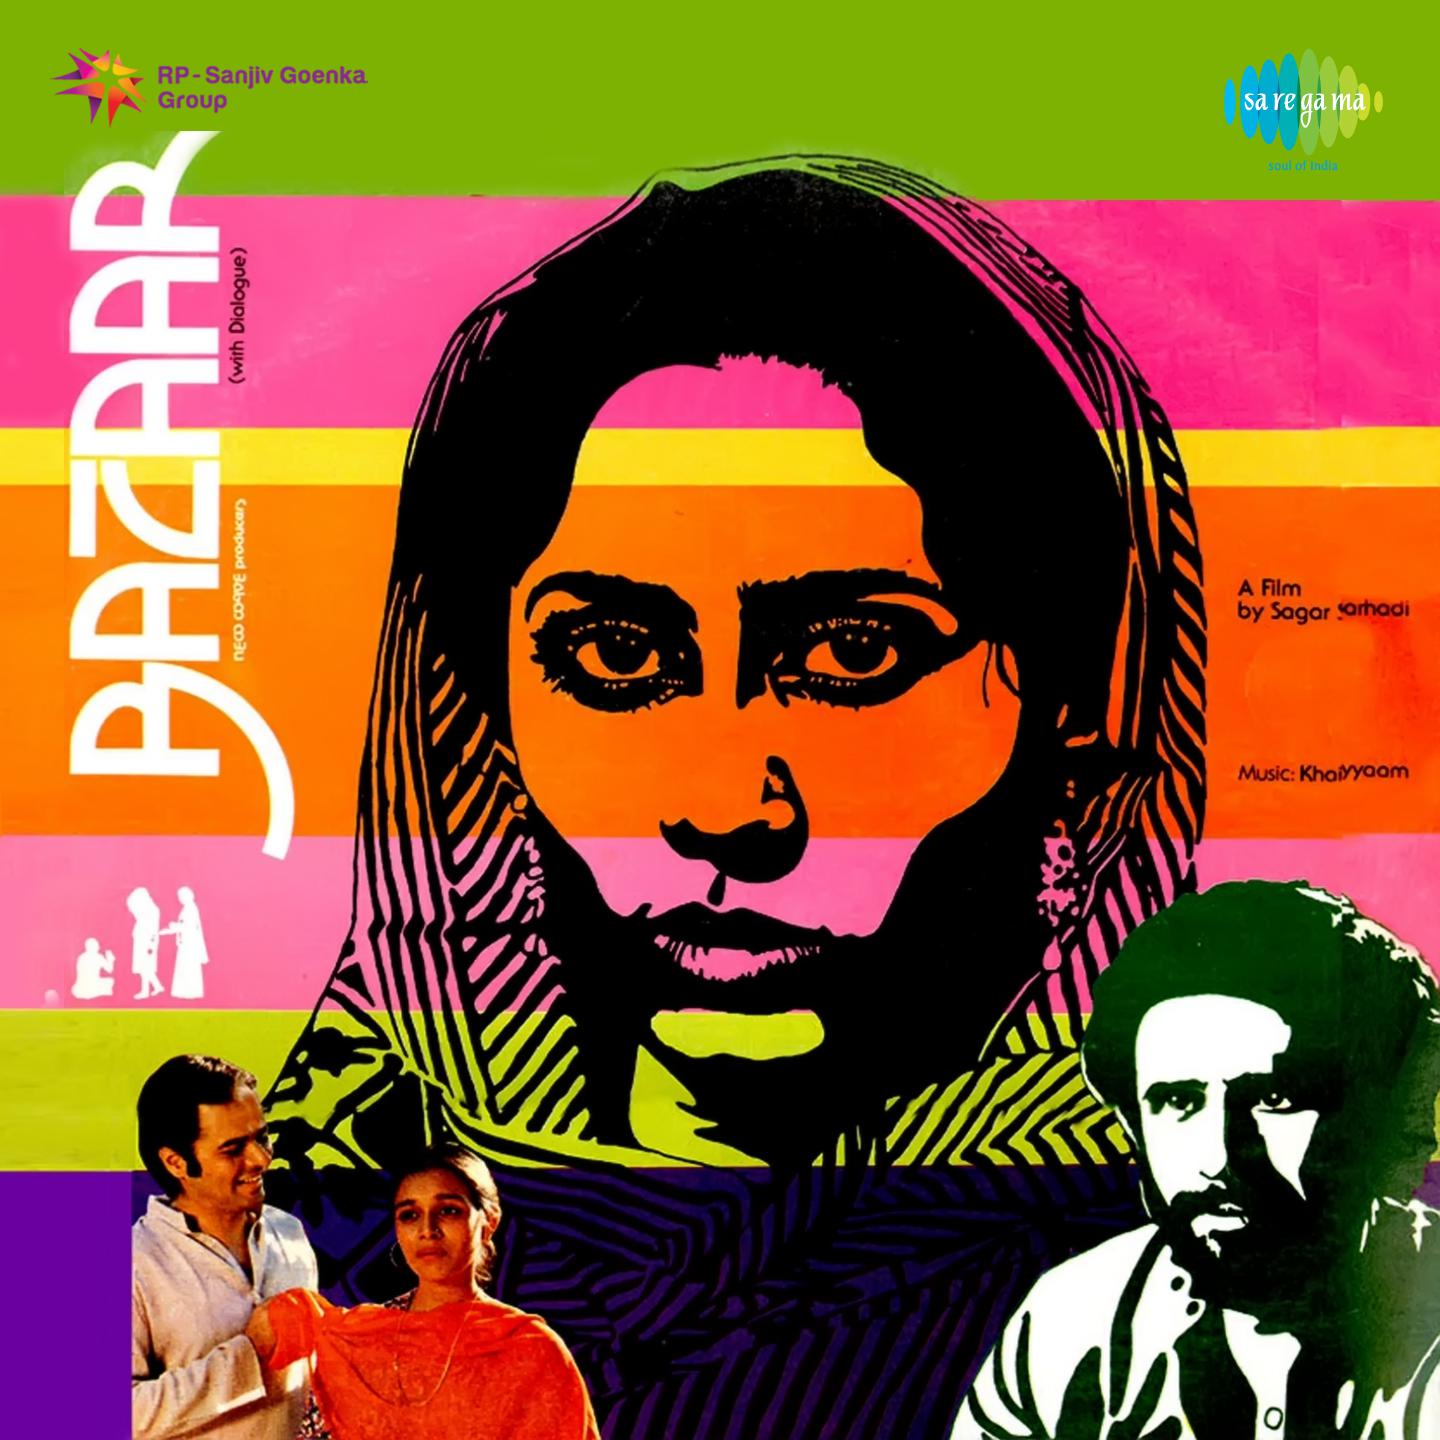 Bazaar [Dialogue] - Kaun Hain Jo Ek Saya Ki & Songs